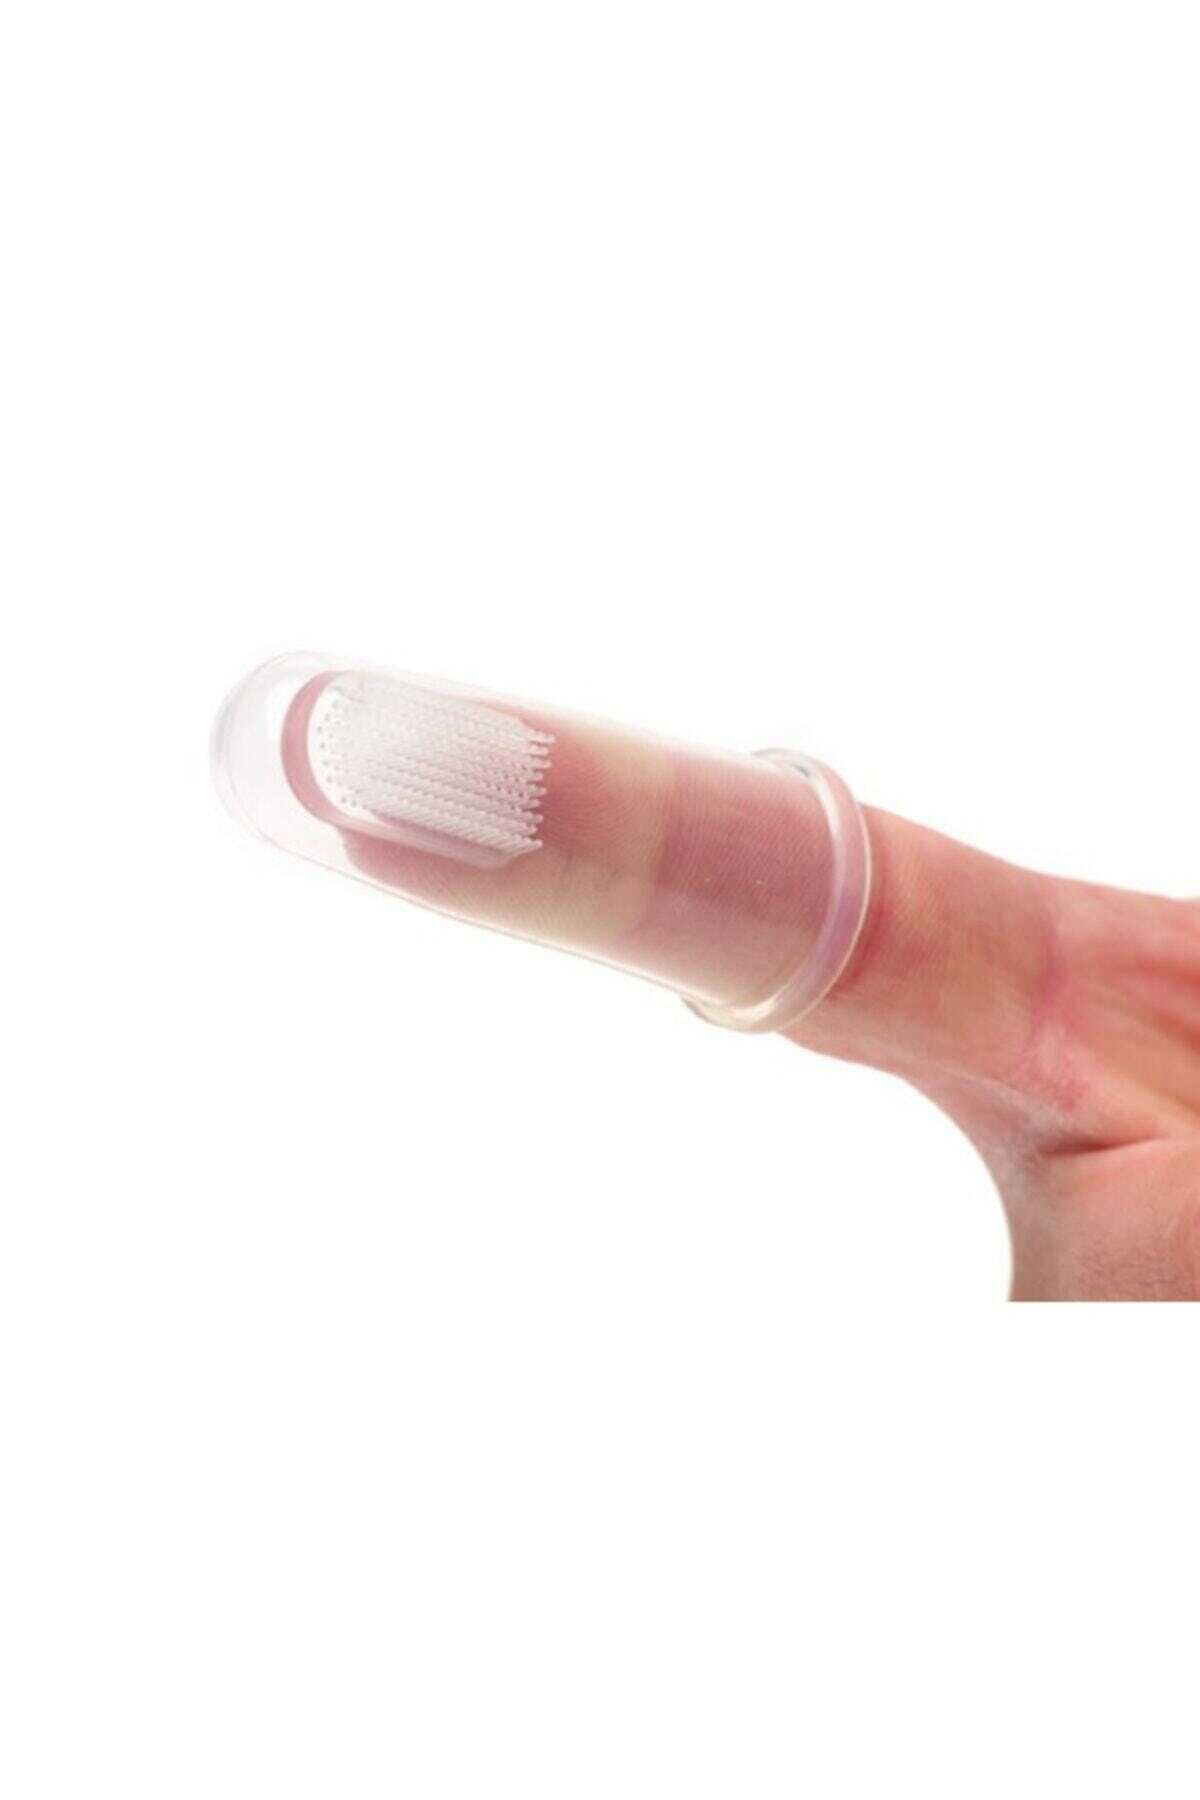 مسواک انگشتی سیلیکونی کودک زیر 2 سال مجموعه 2 عددی بی رنگ برند Dentinox 